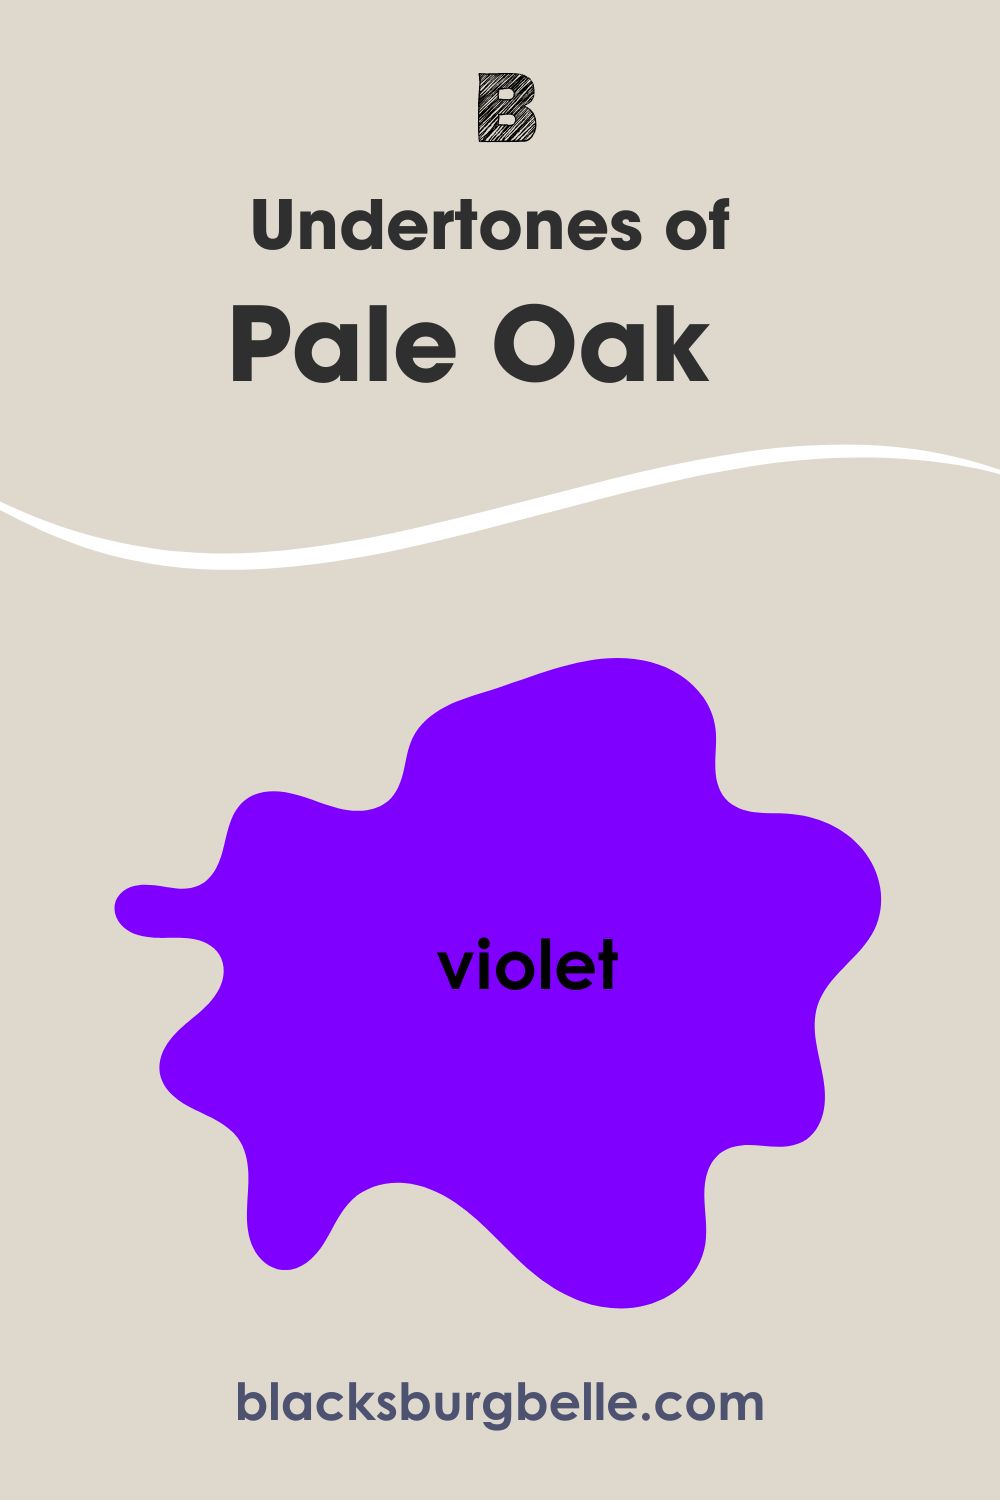 Undertones of Pale Oak